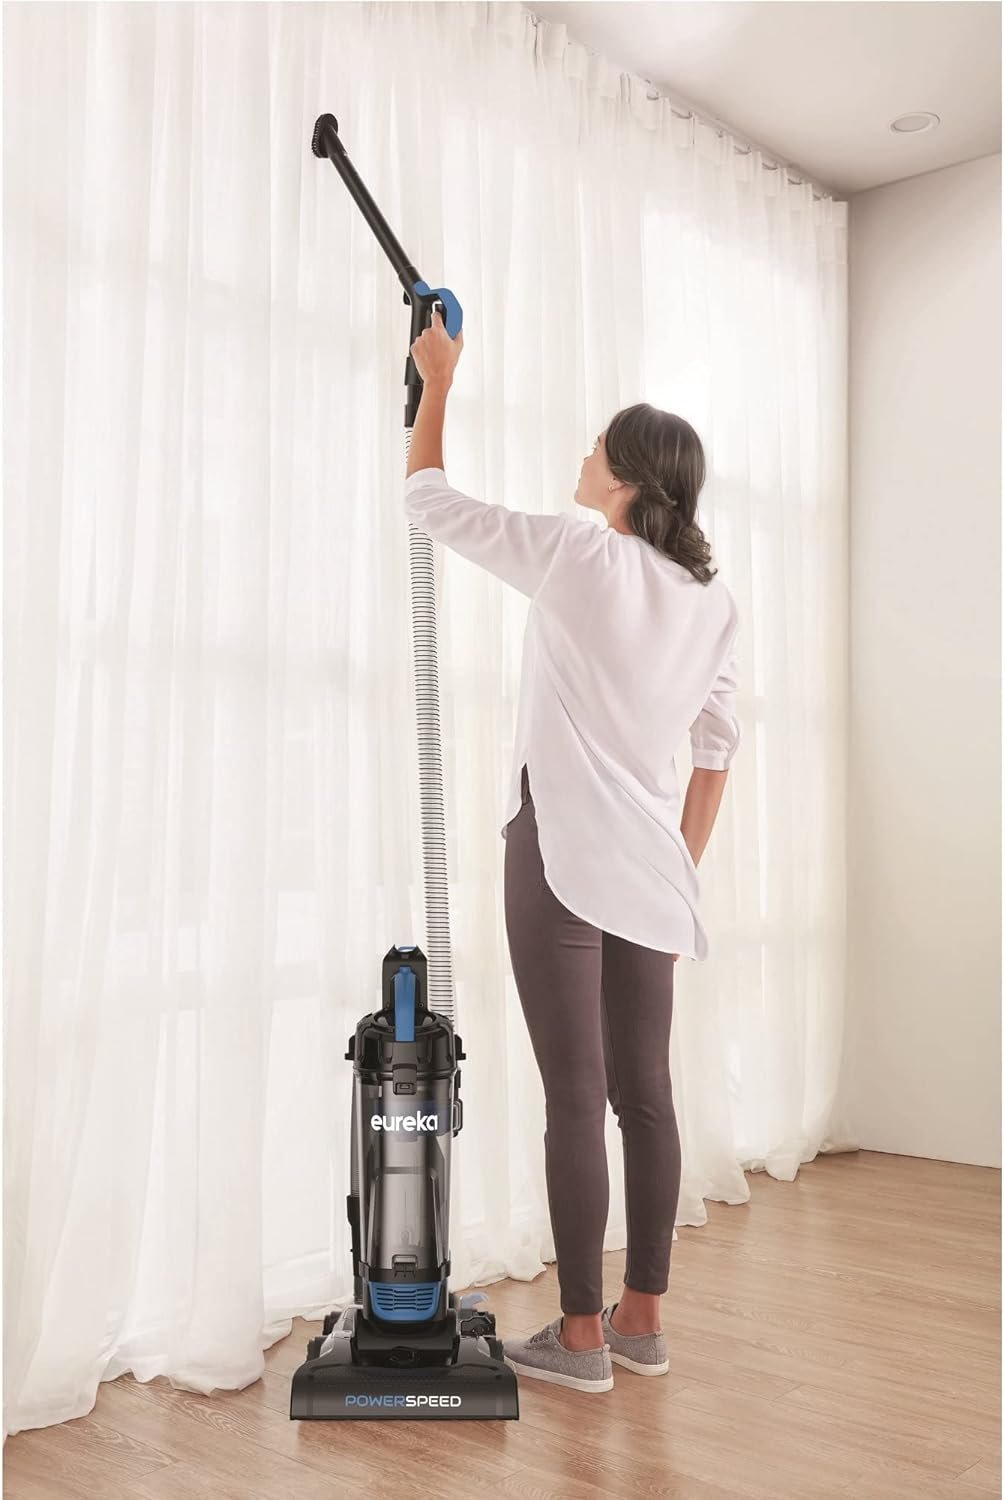 EUREKA PowerSpeed Upright Cleaner Carpet and Floor Lightweight Powerful Bagless Vacuum, NEU185 w/Washable Filter, Black